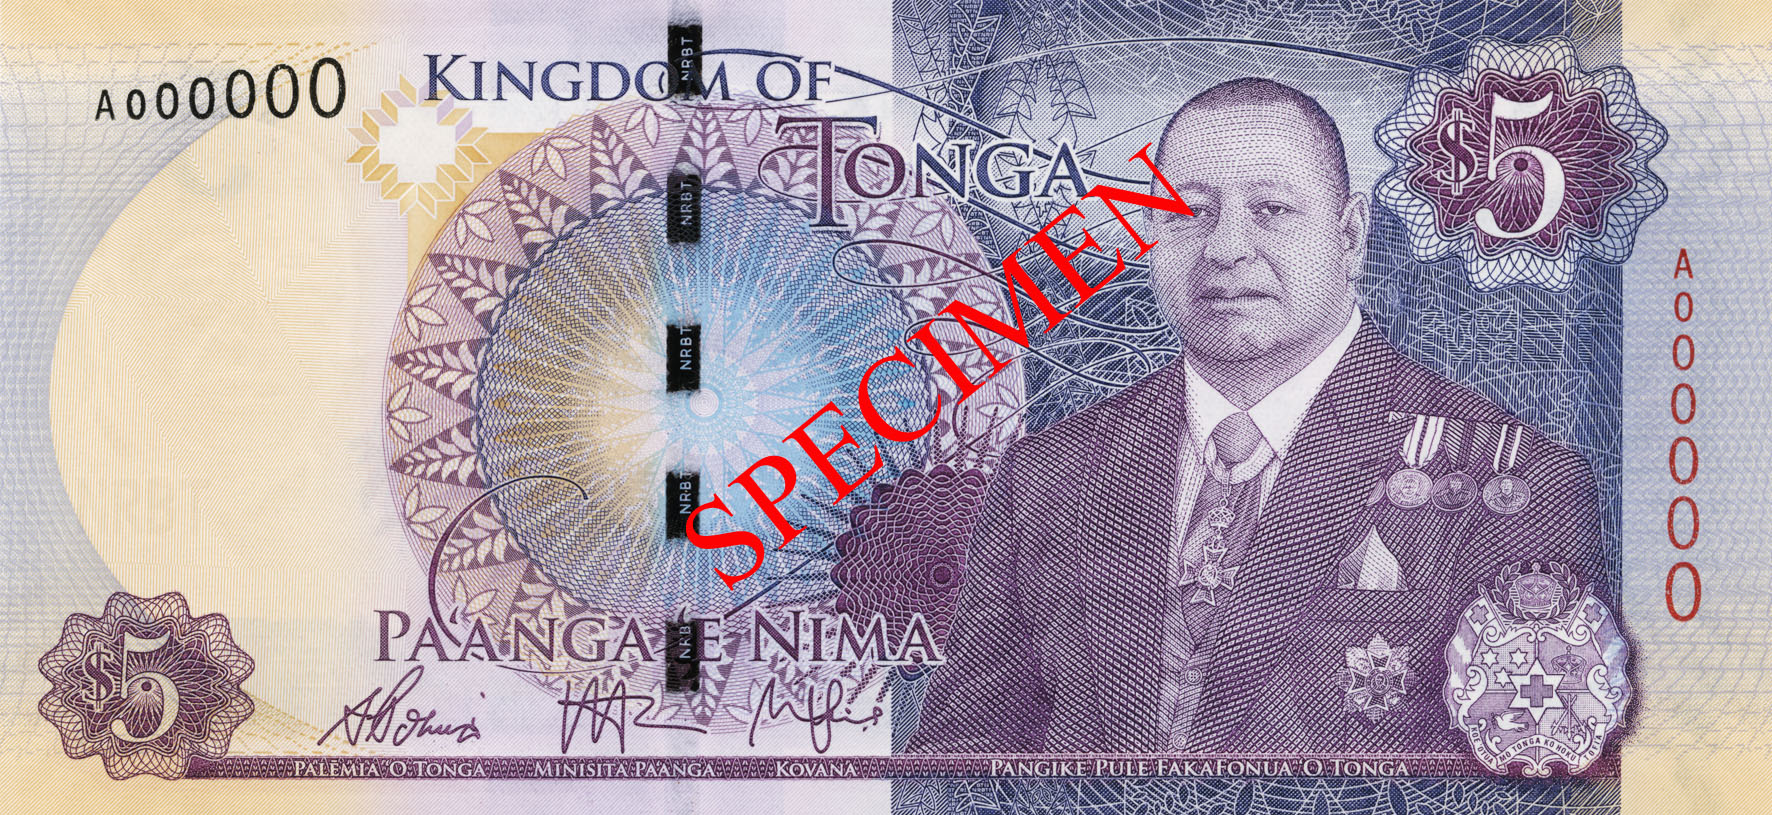 Tonga-5-2015-Specimen-front300dpi